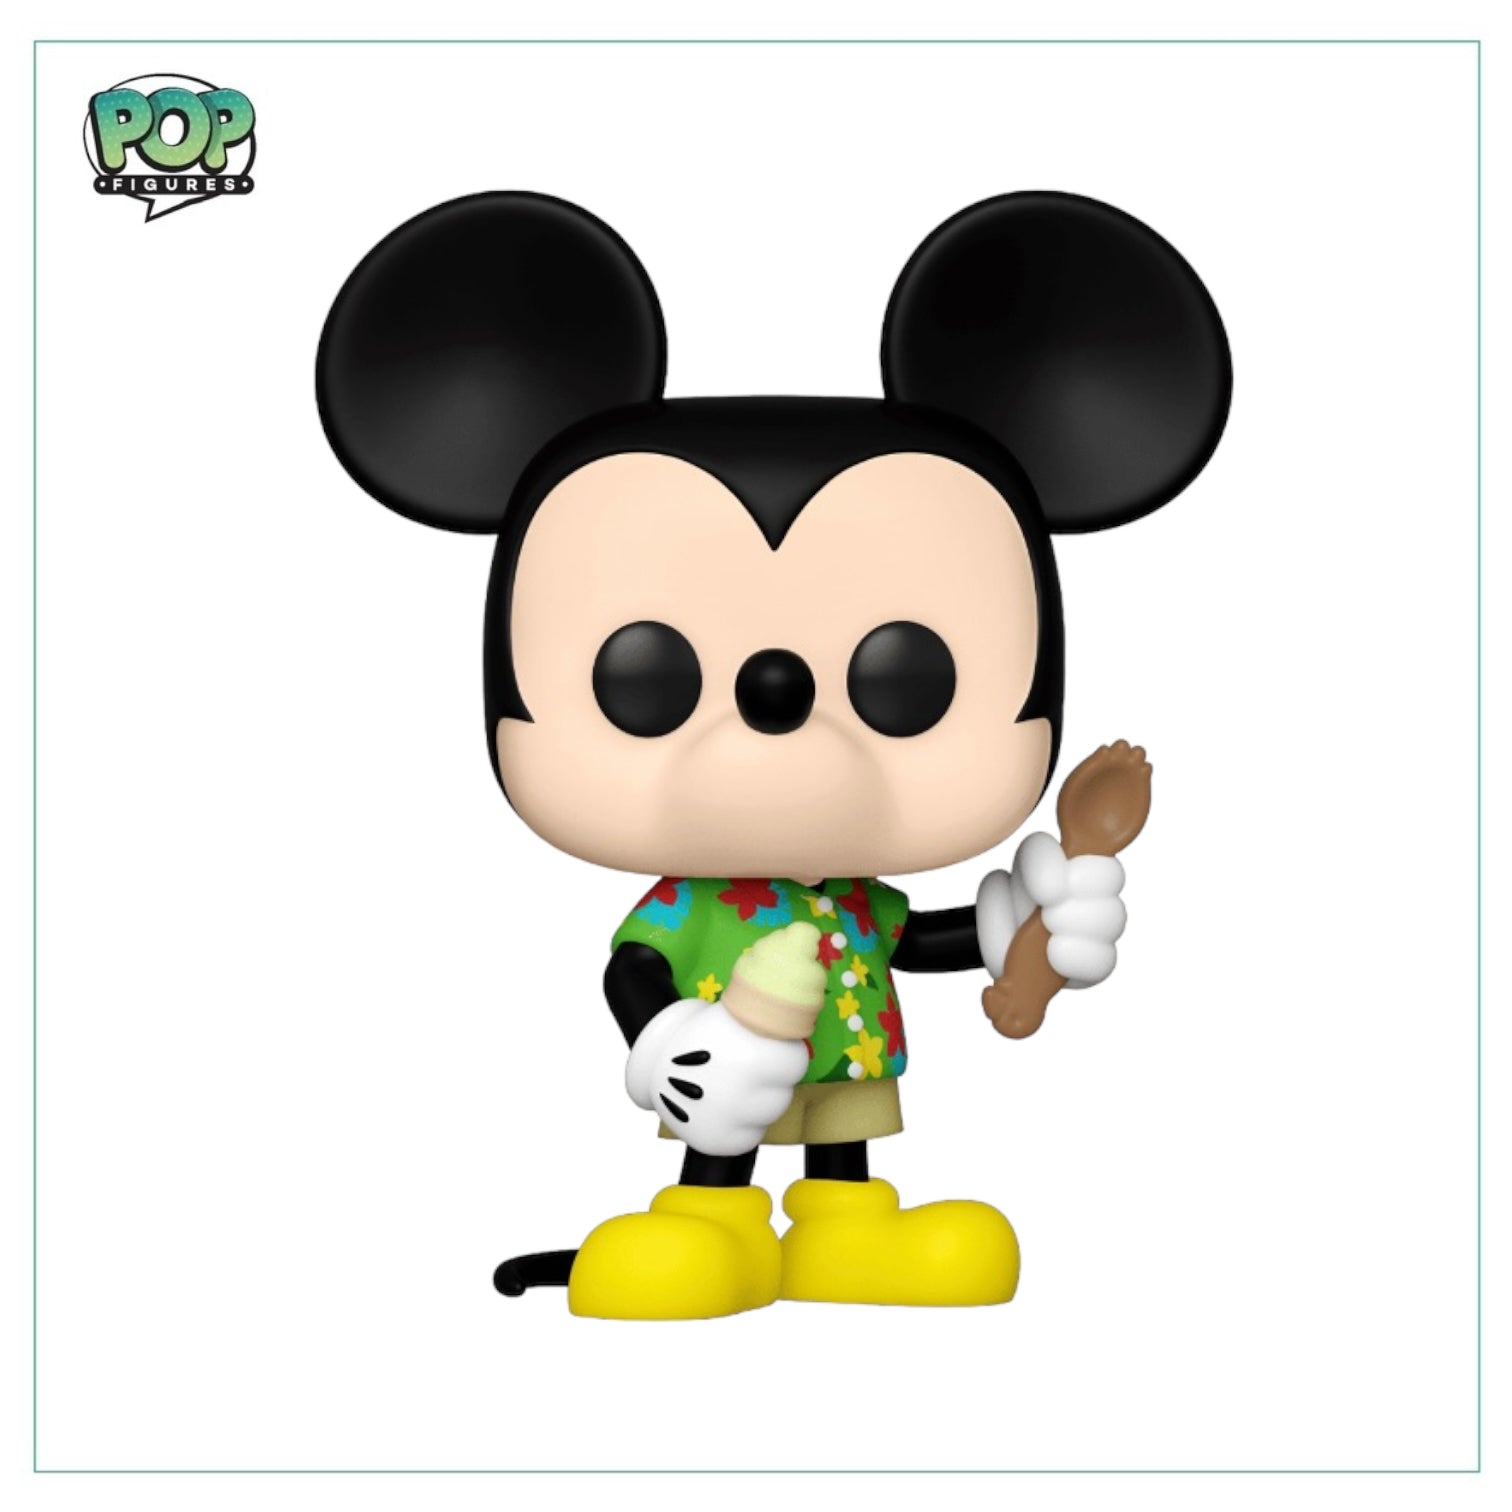 Mickey Mouse #1307 Funko Pop! - Walt Disney World 50th